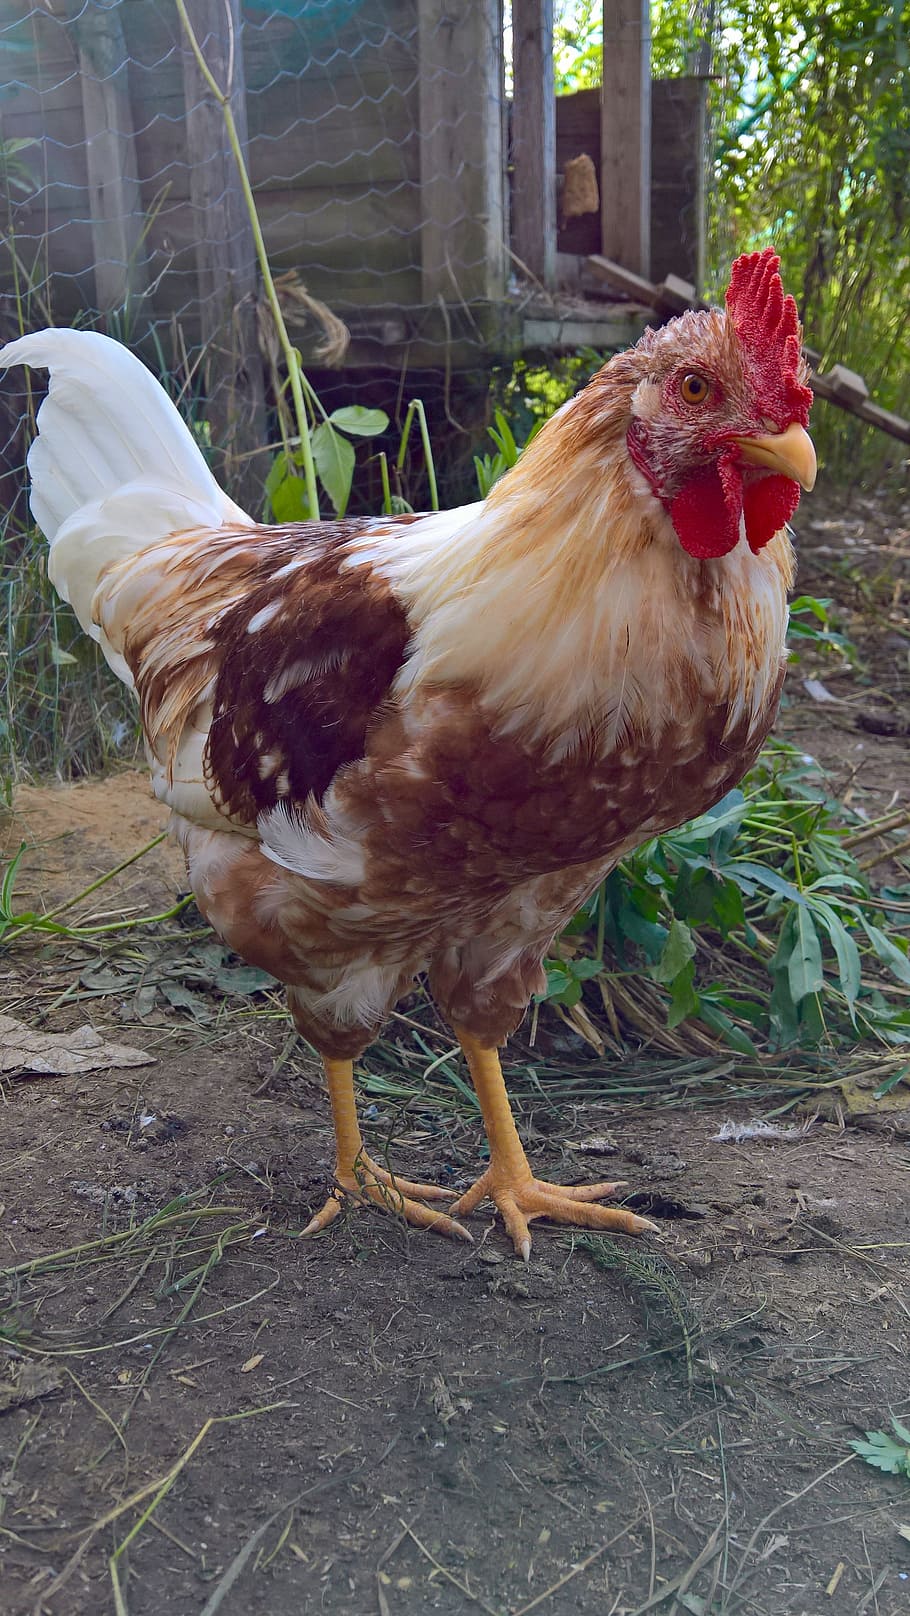 Cock, Poultry, Chicken, bird, chicken - Bird, farm, animal, agriculture, rooster, rural Scene